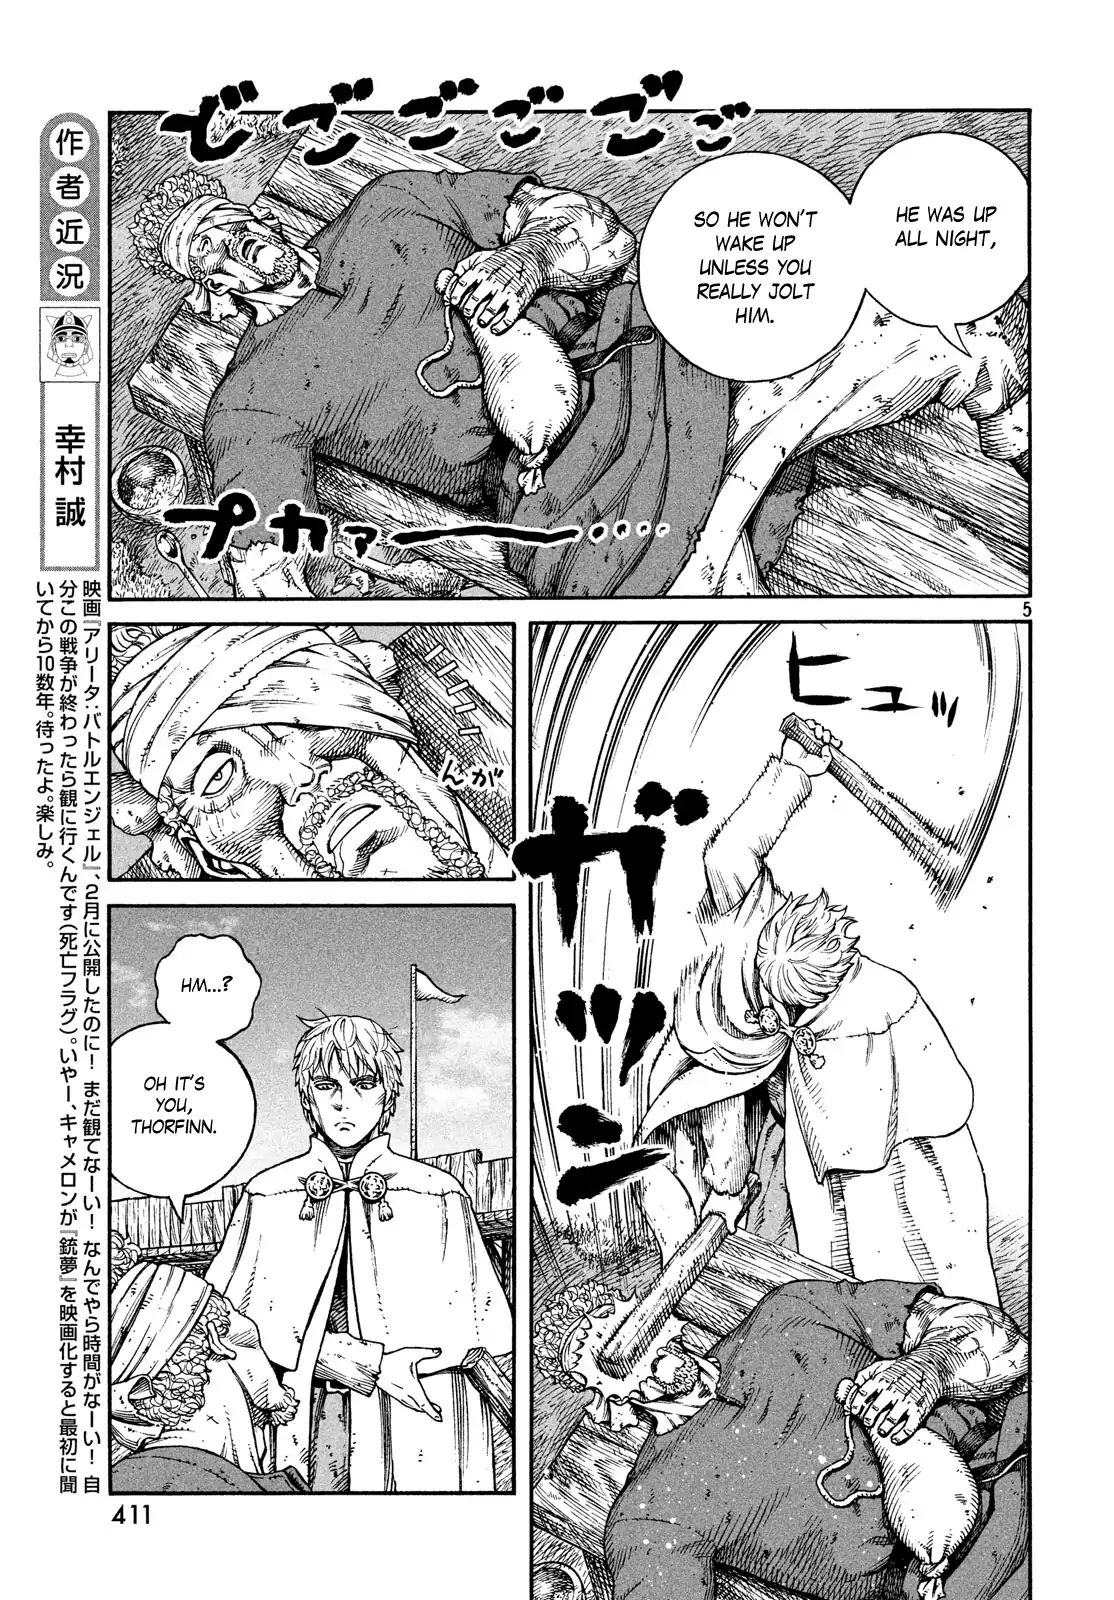 Vinland Saga Manga Manga Chapter - 159 - image 5